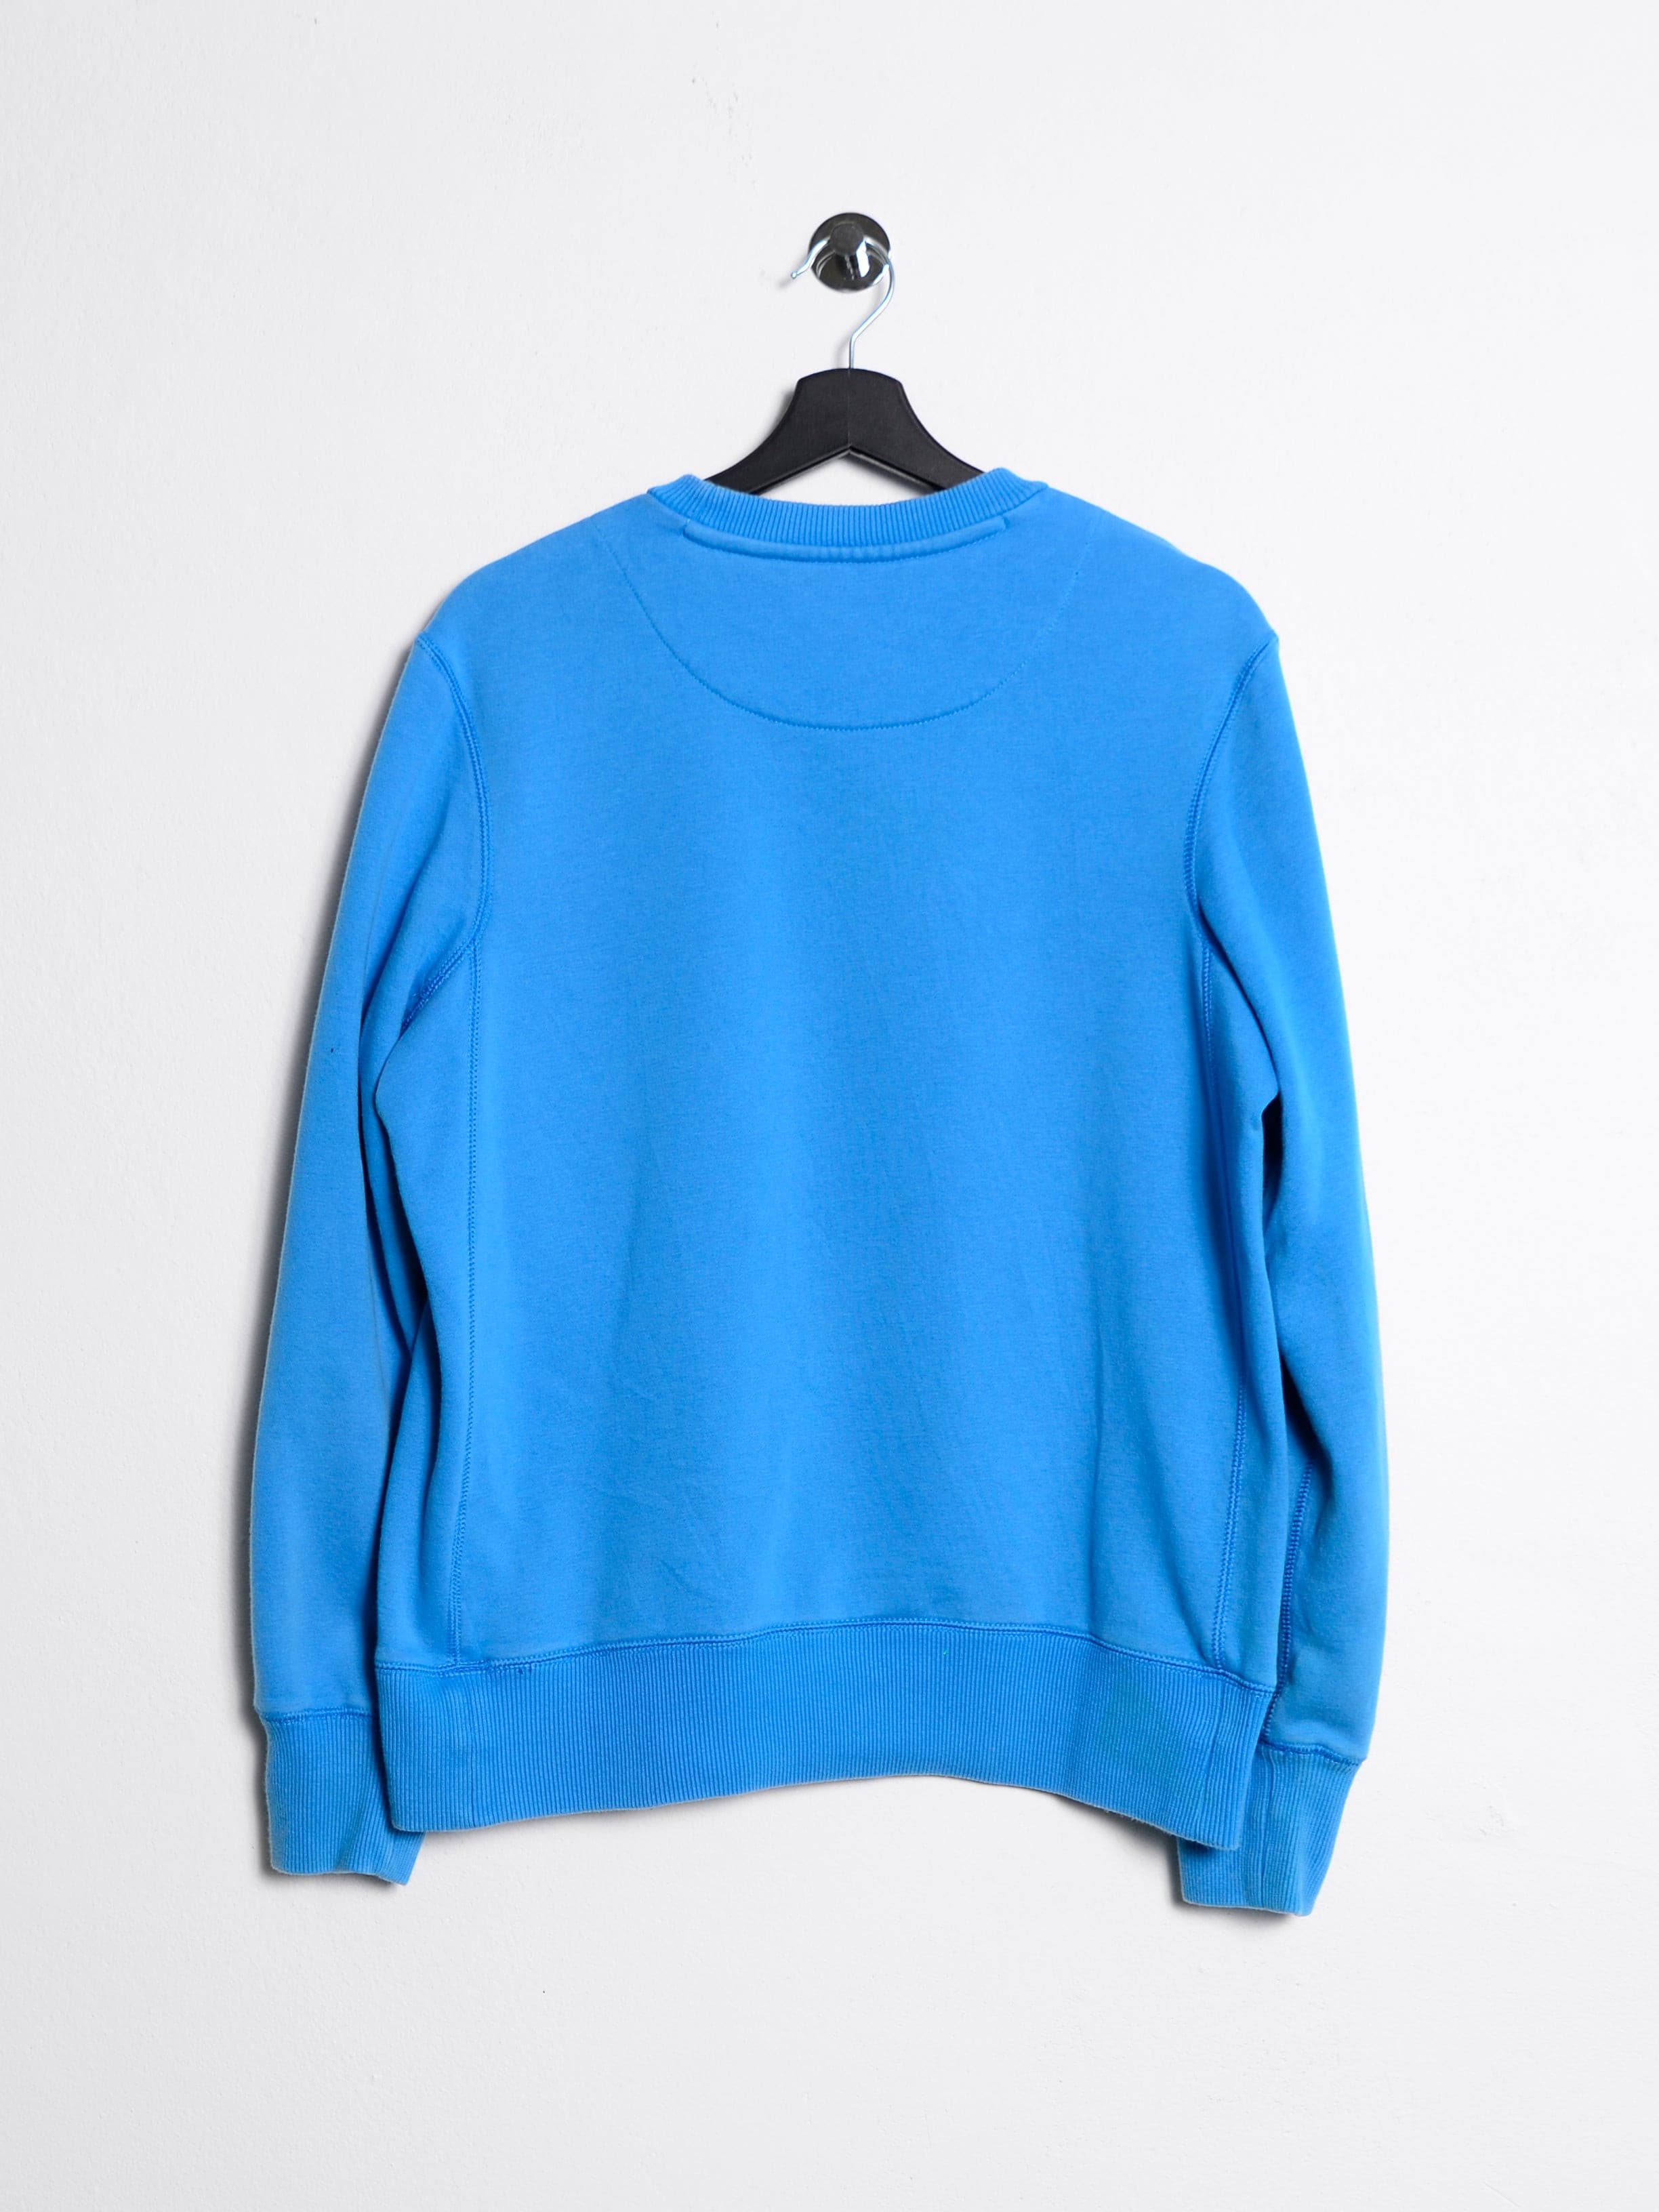 Nike Basic Sweatshirt Blue // Medium - RHAGHOUSE VINTAGE